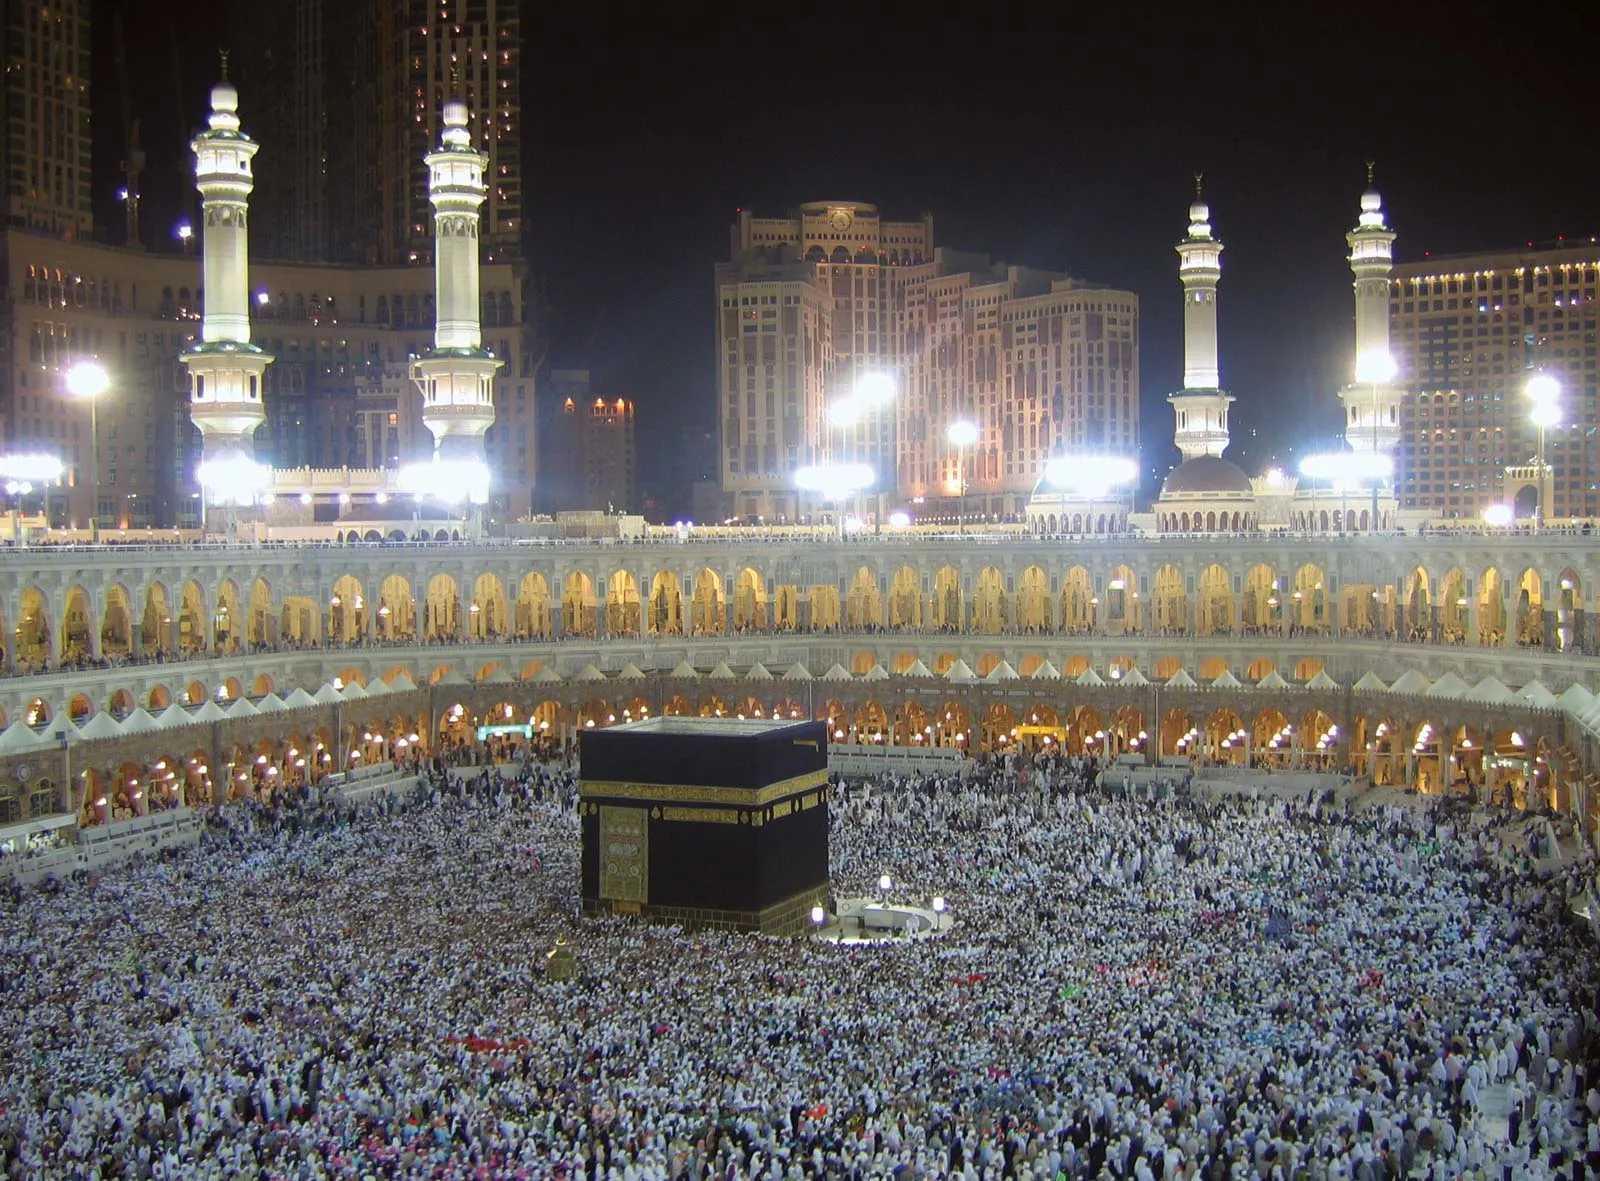 19 dead in Hajj Pilgrimage heat